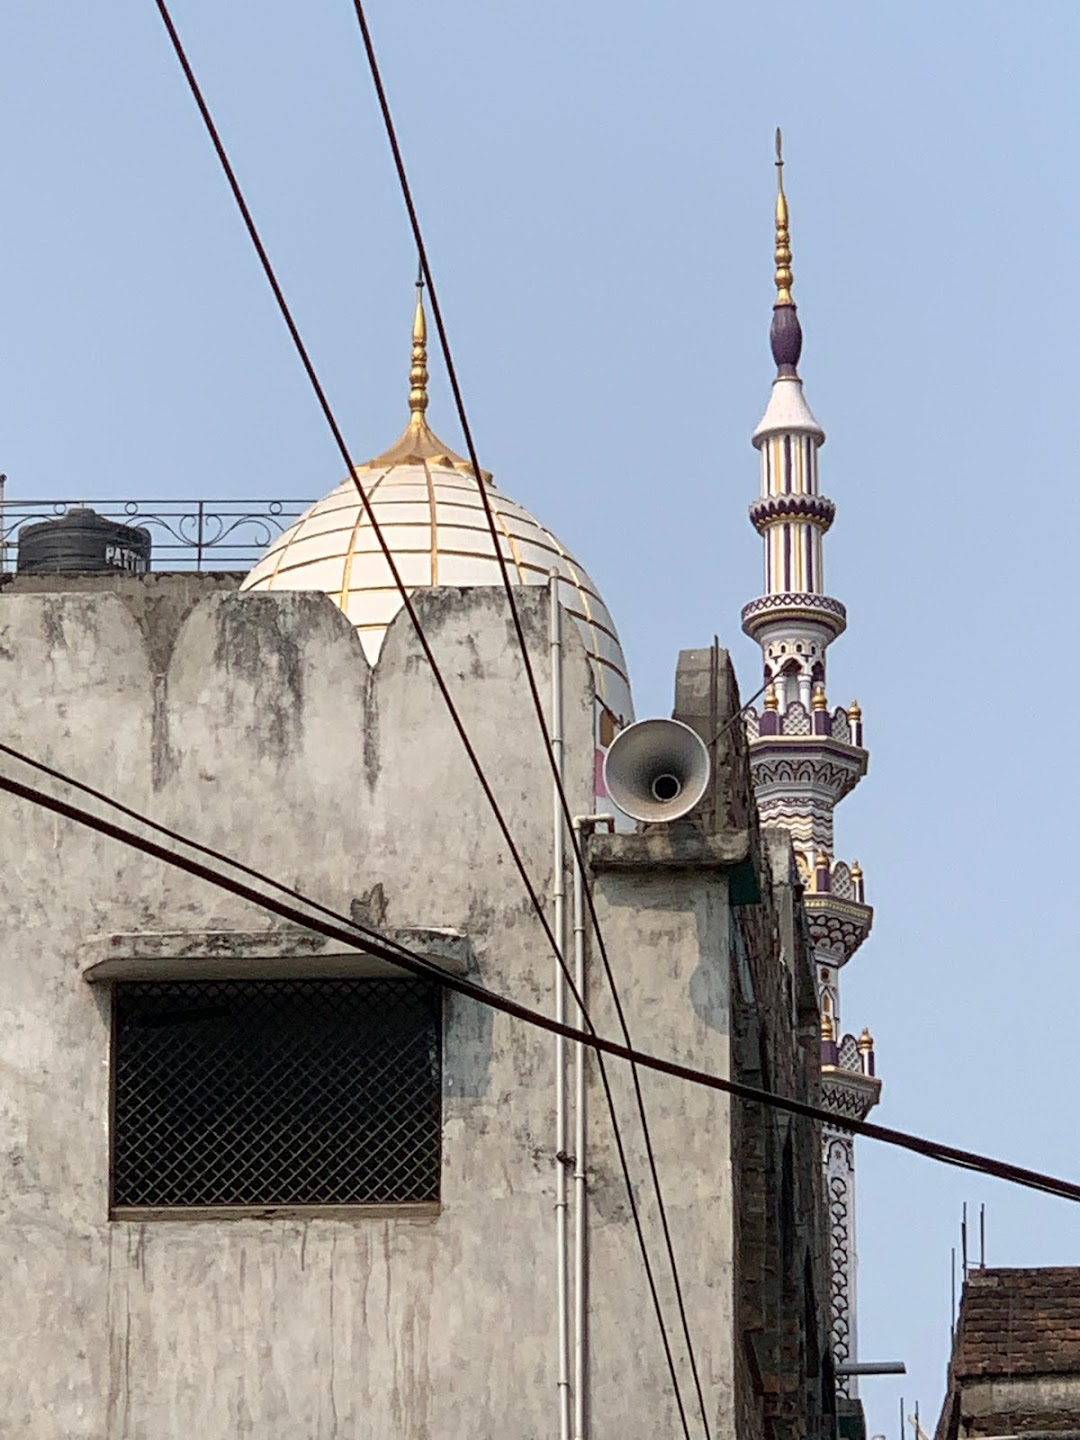 Chand Tara Masjid